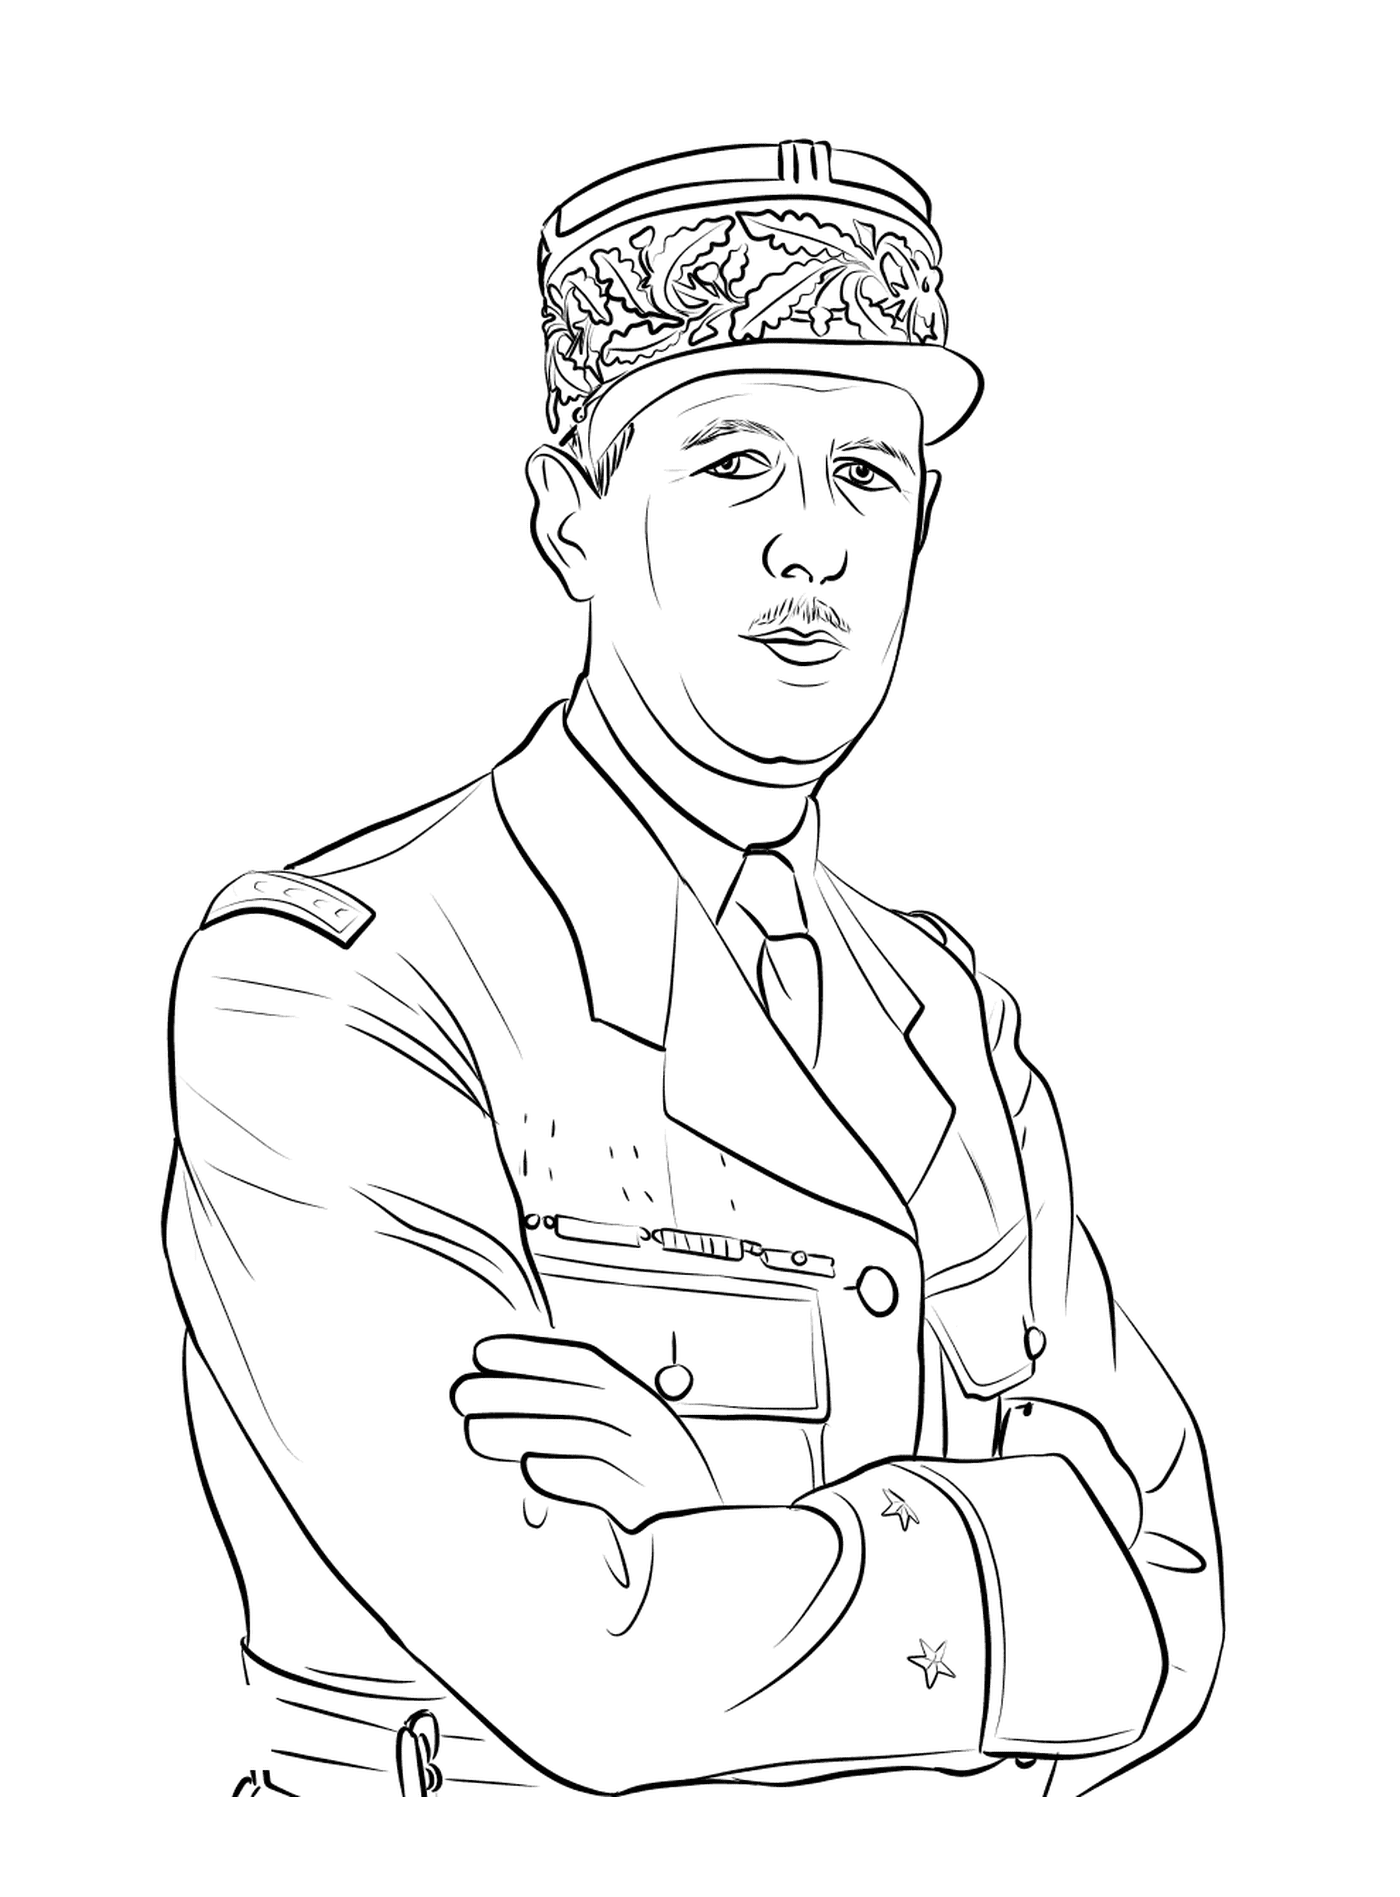  Charles de Gaulle, military leader 